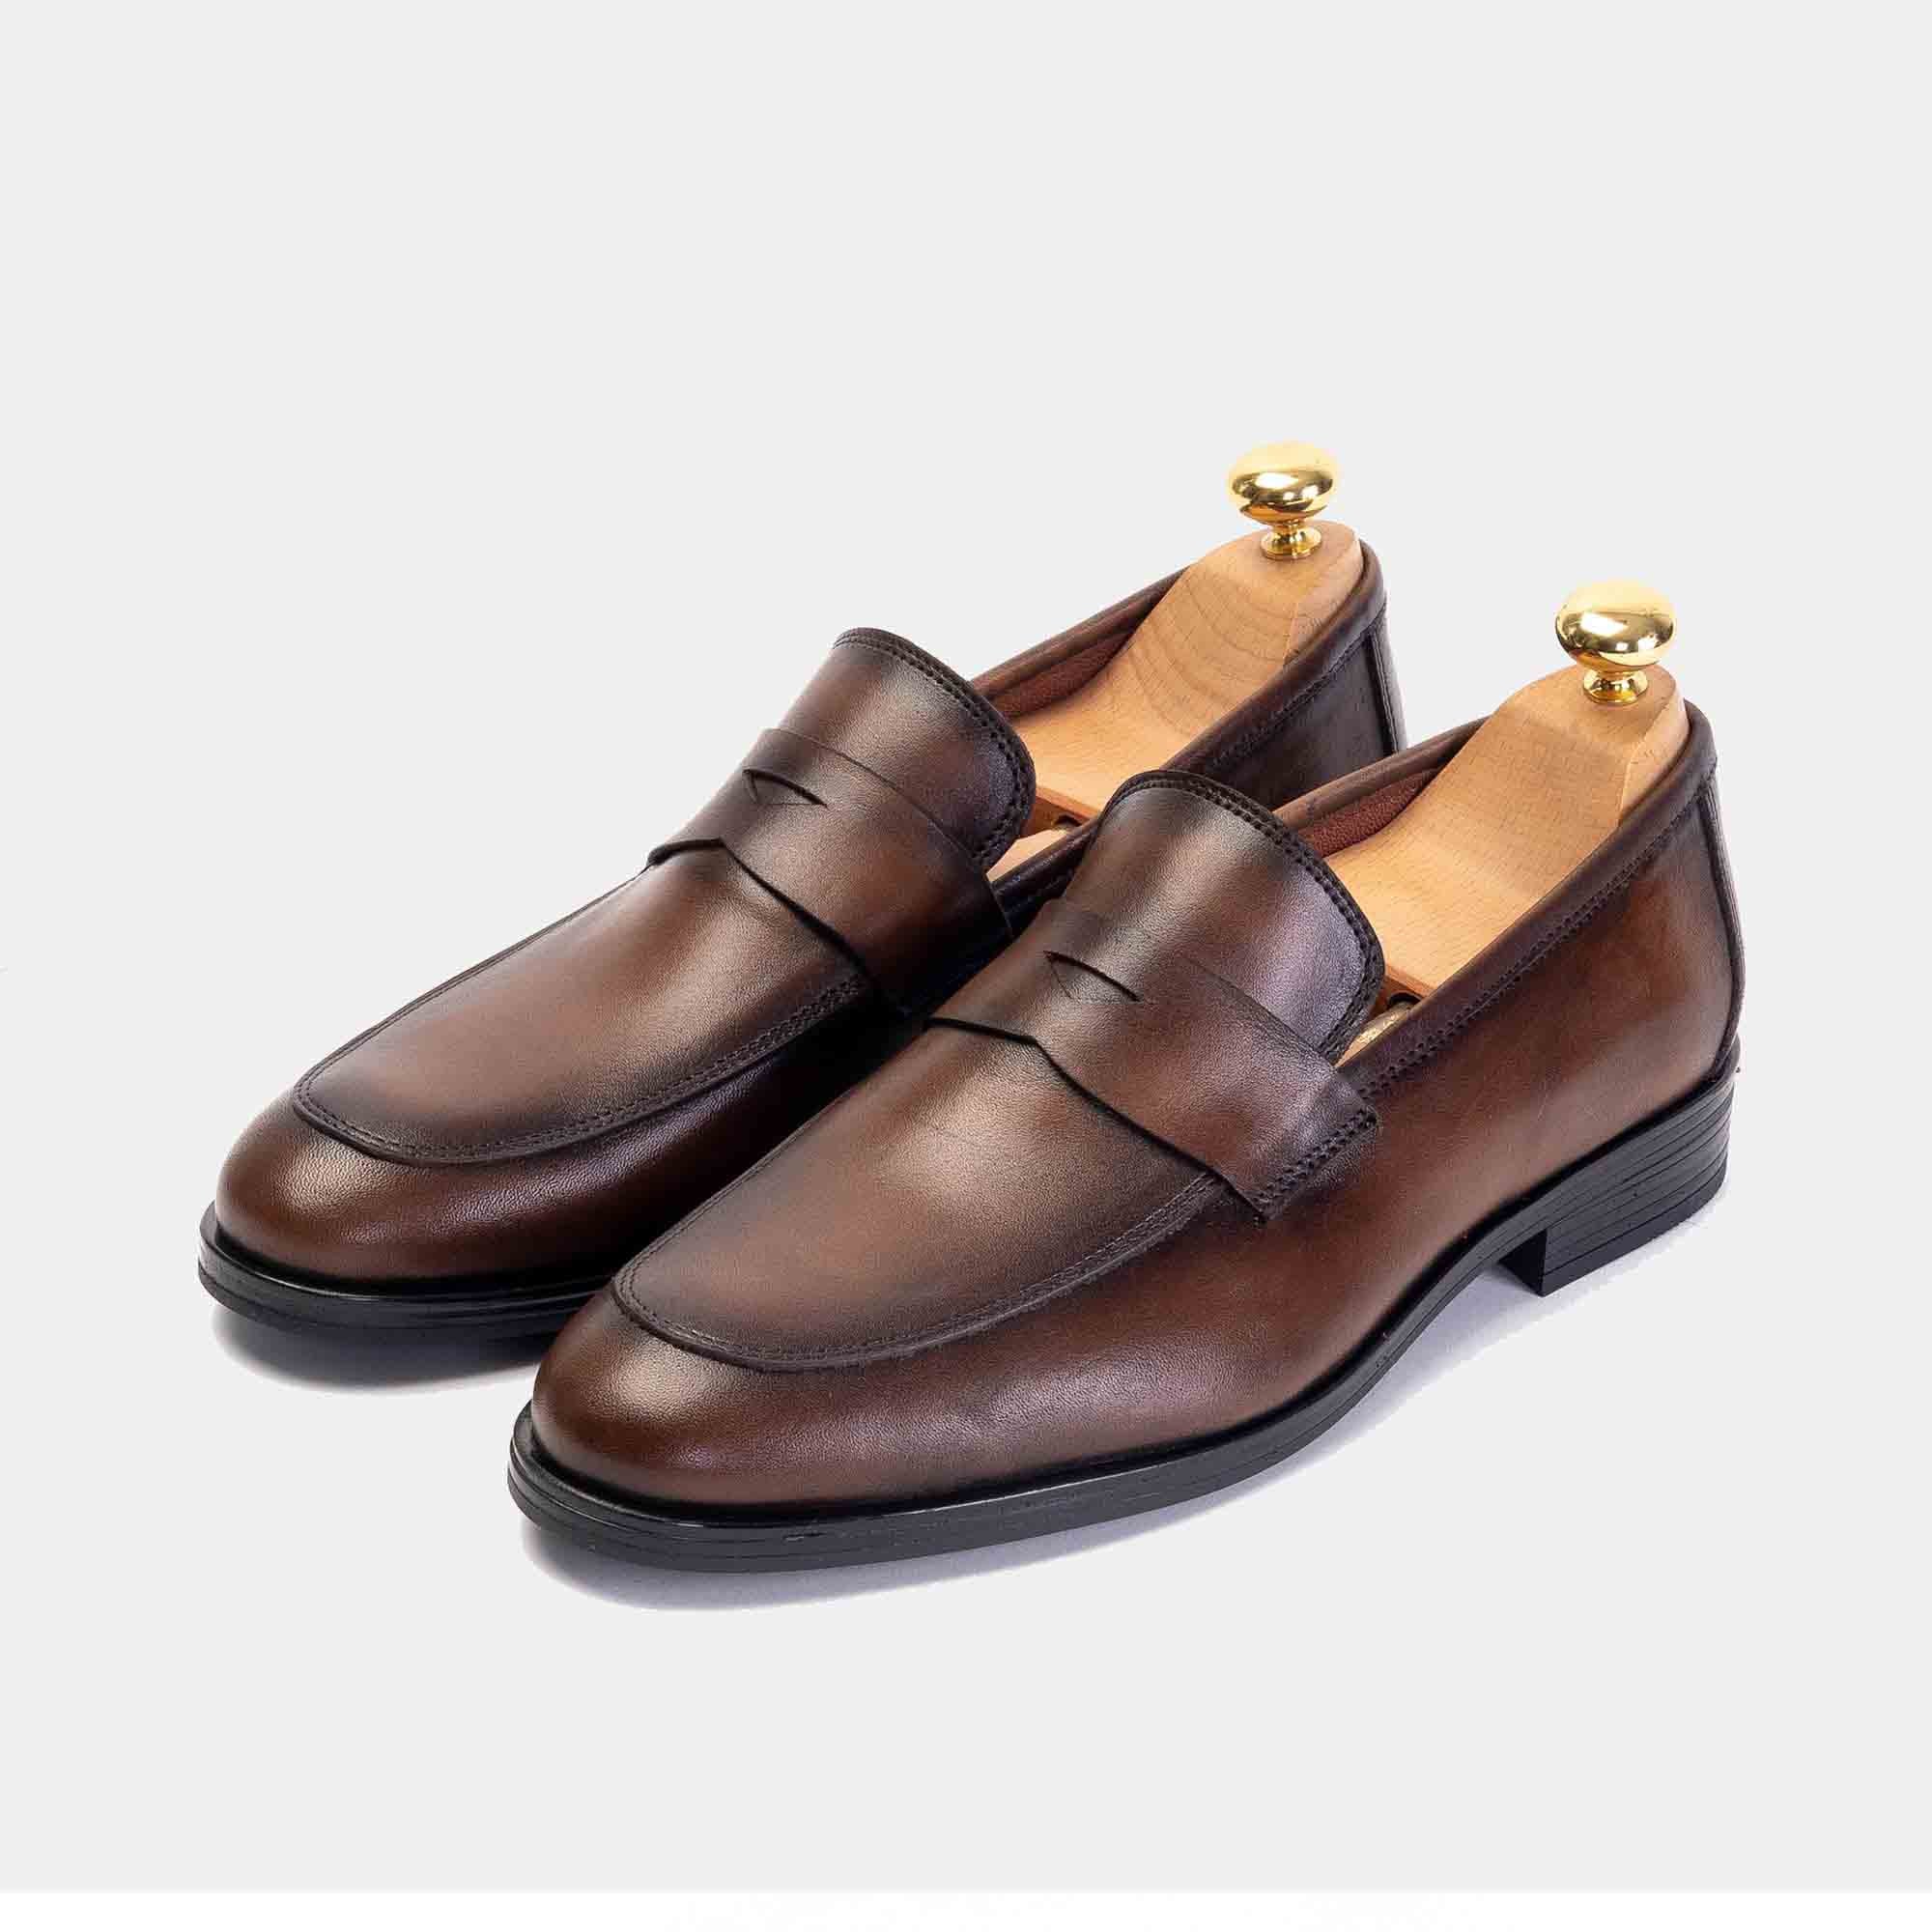 1120 S Chaussure en cuir Marron Vintage